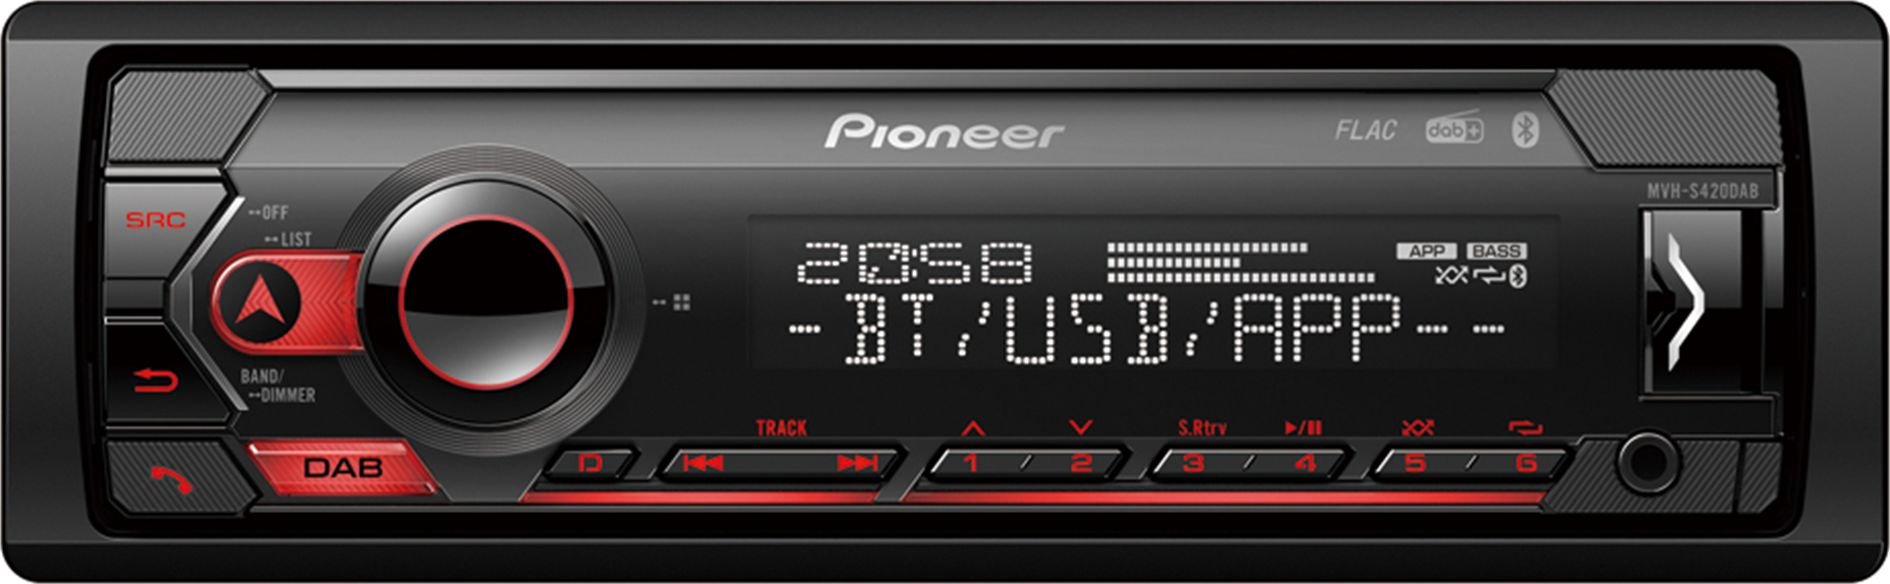 Radio MP3 auto Pioneer MVH-S420DAB, 1DIN, Bluetooth, DAB/DAB+, Spotify, 4x50W, USB, compatibil cu dispozitive Apple/Android, taste Rosu, display Alb